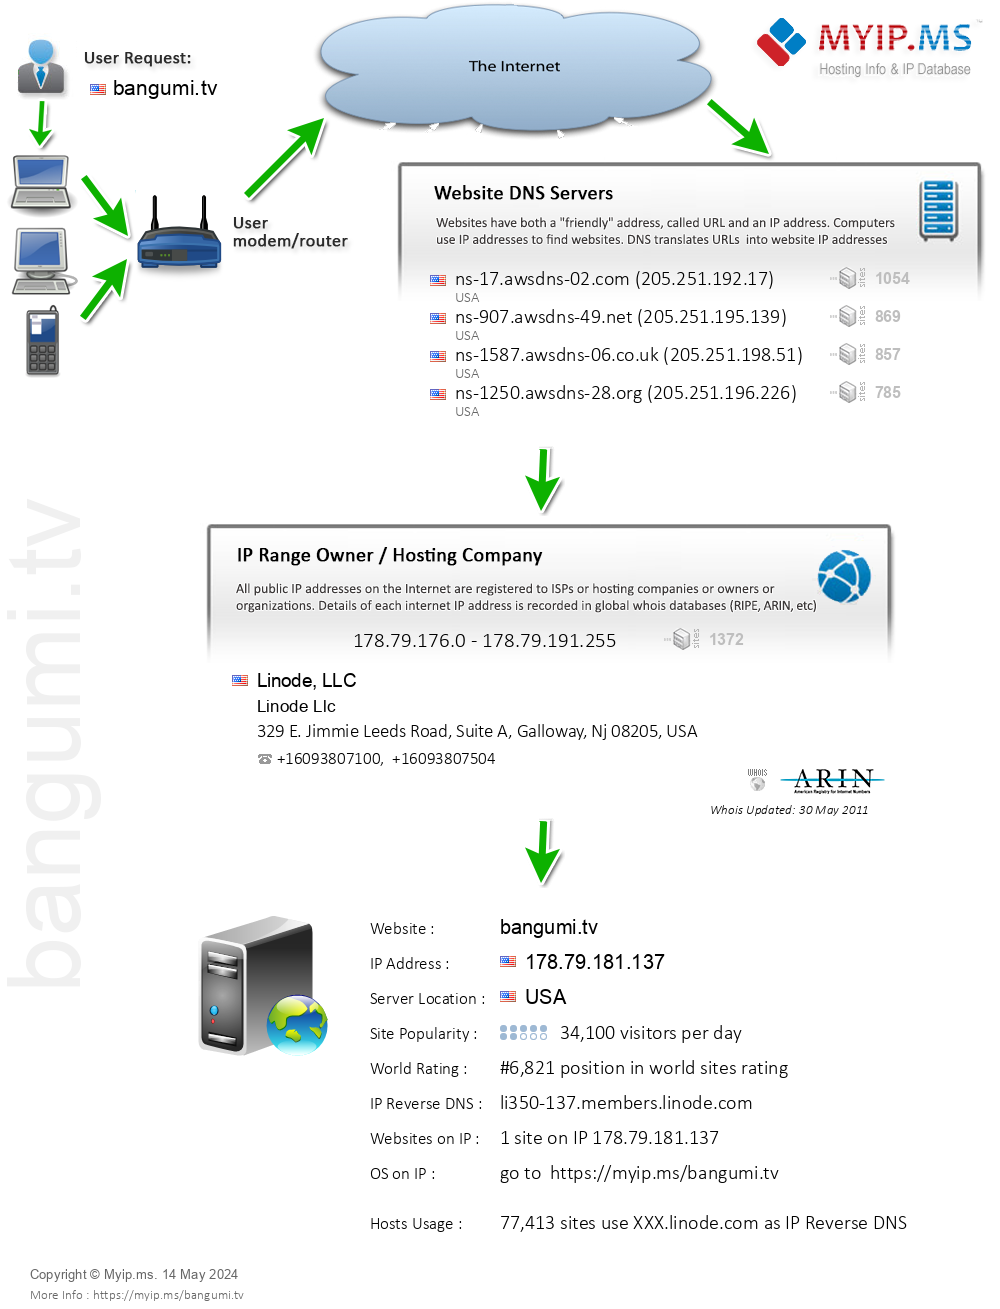 Bangumi.tv - Website Hosting Visual IP Diagram